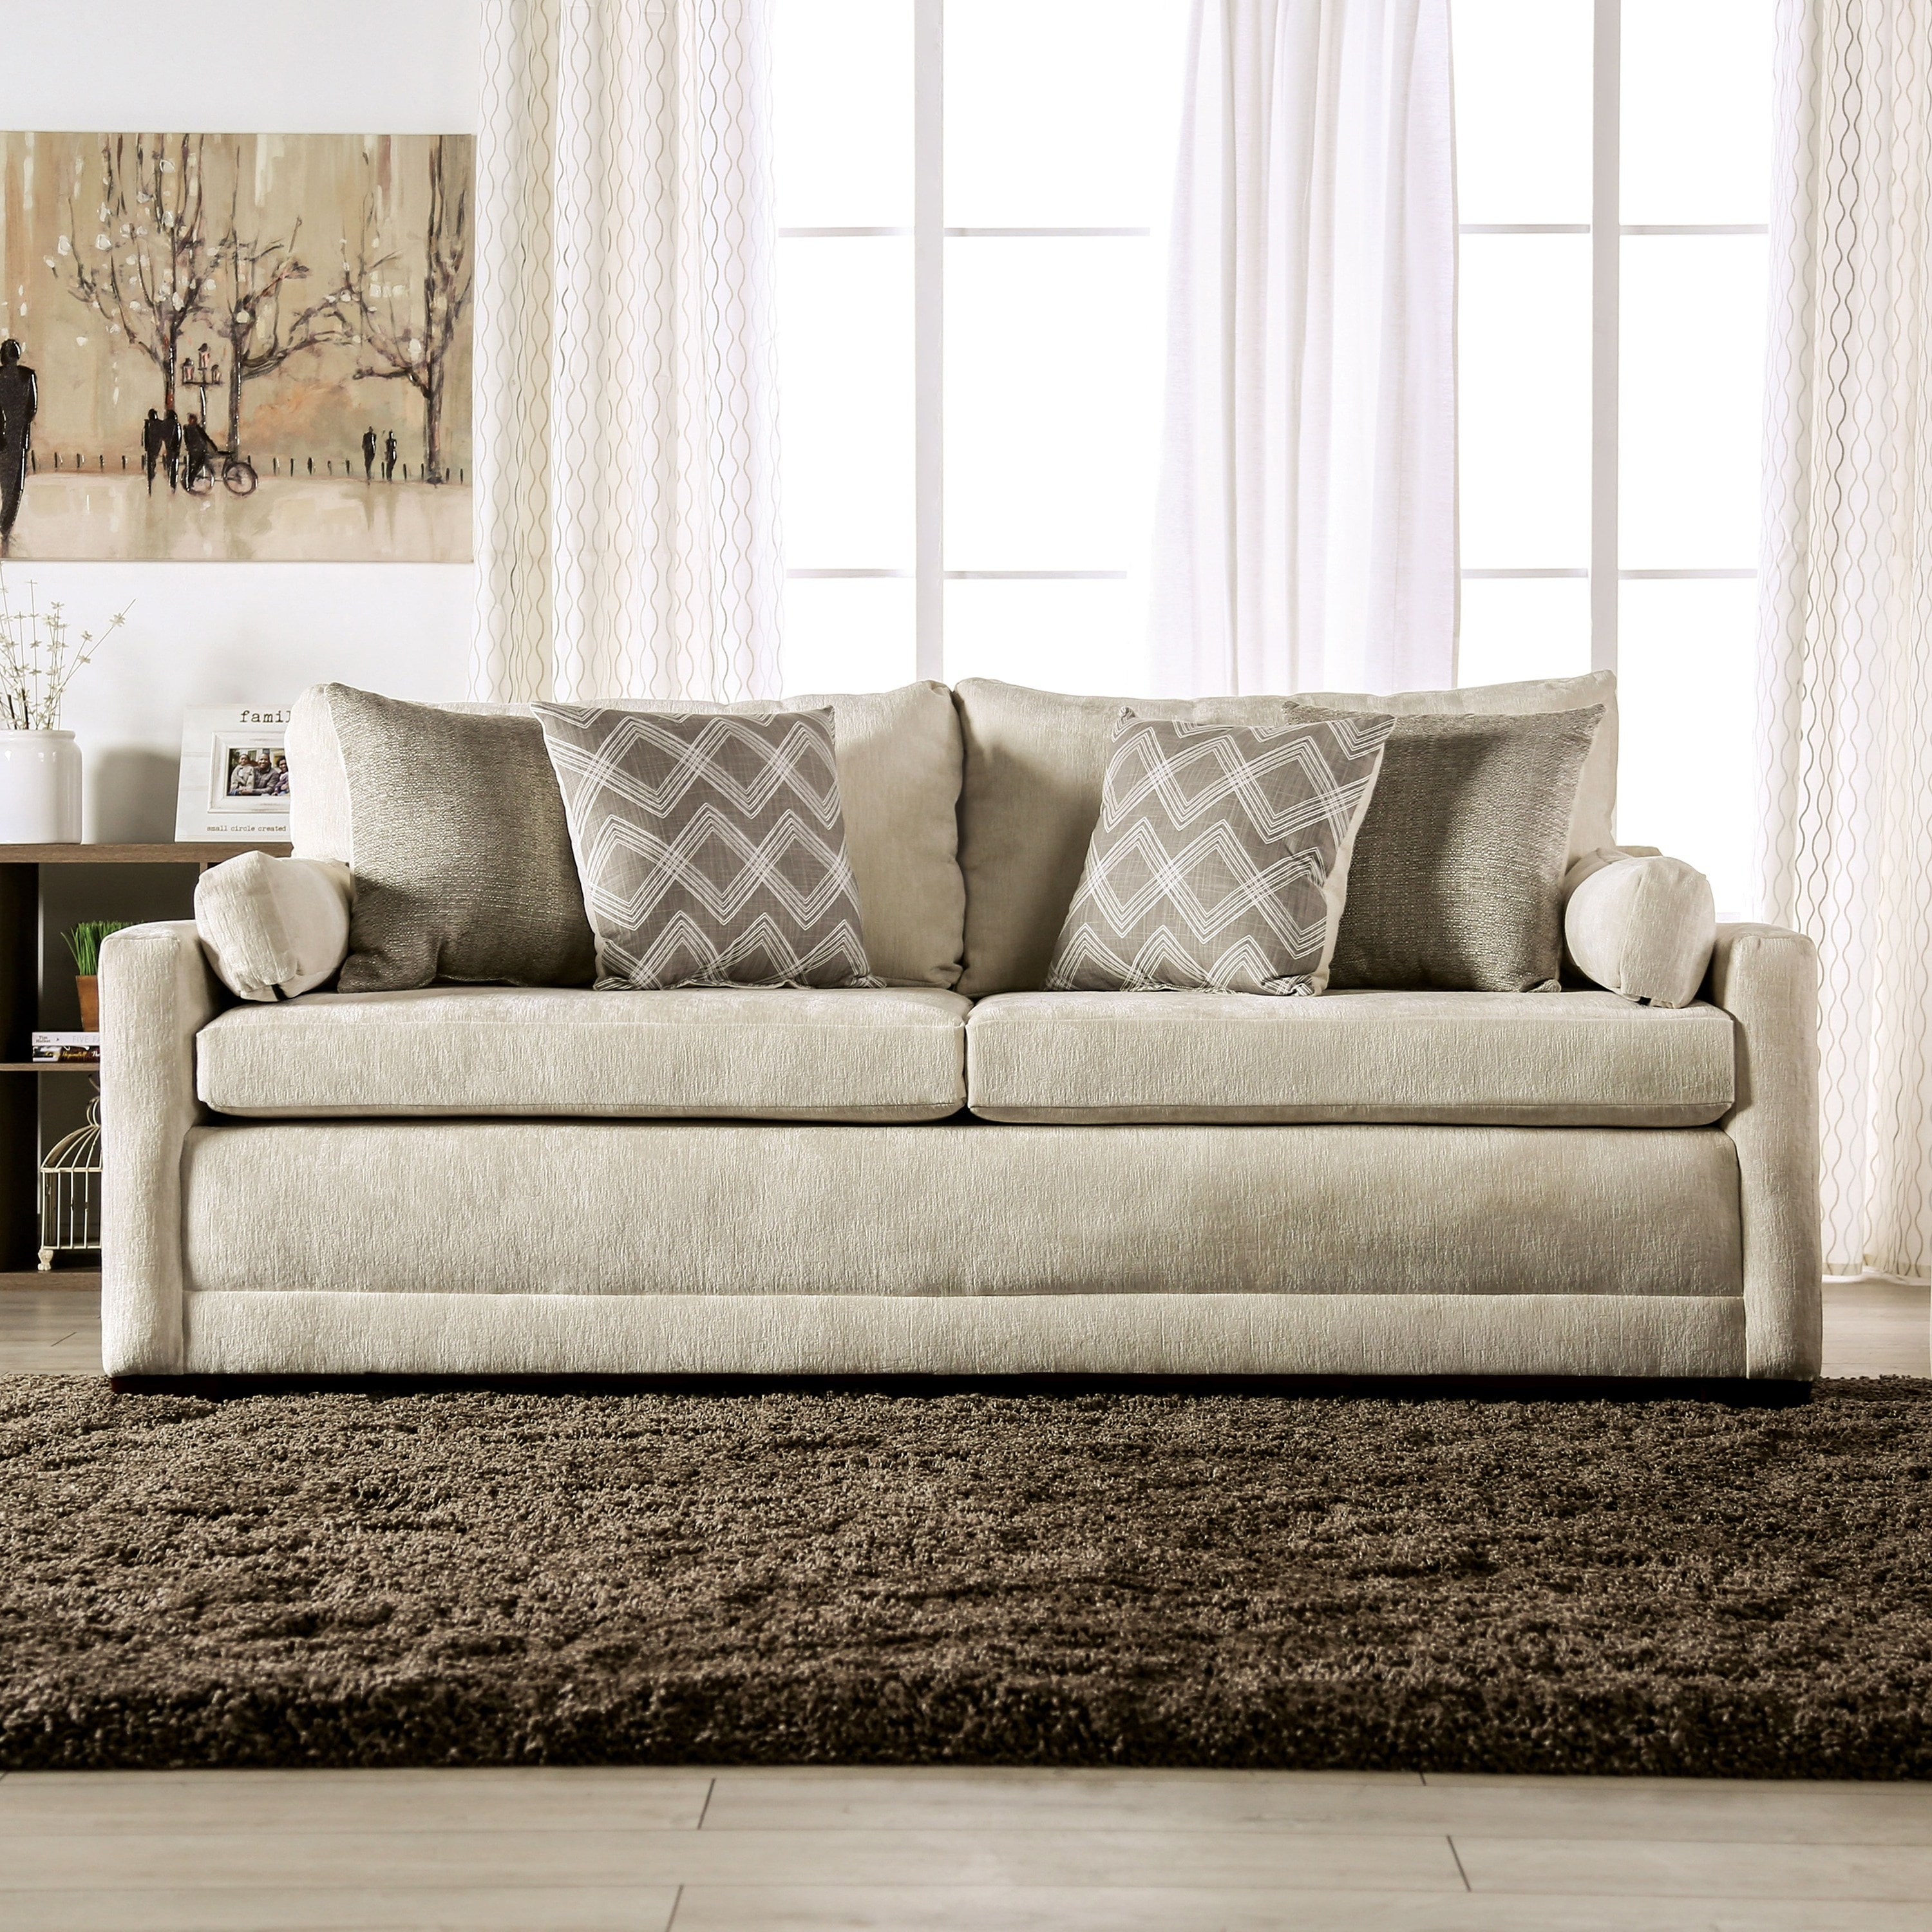 Furniture of America Breward Farmhouse Beige Upholstered Sofa